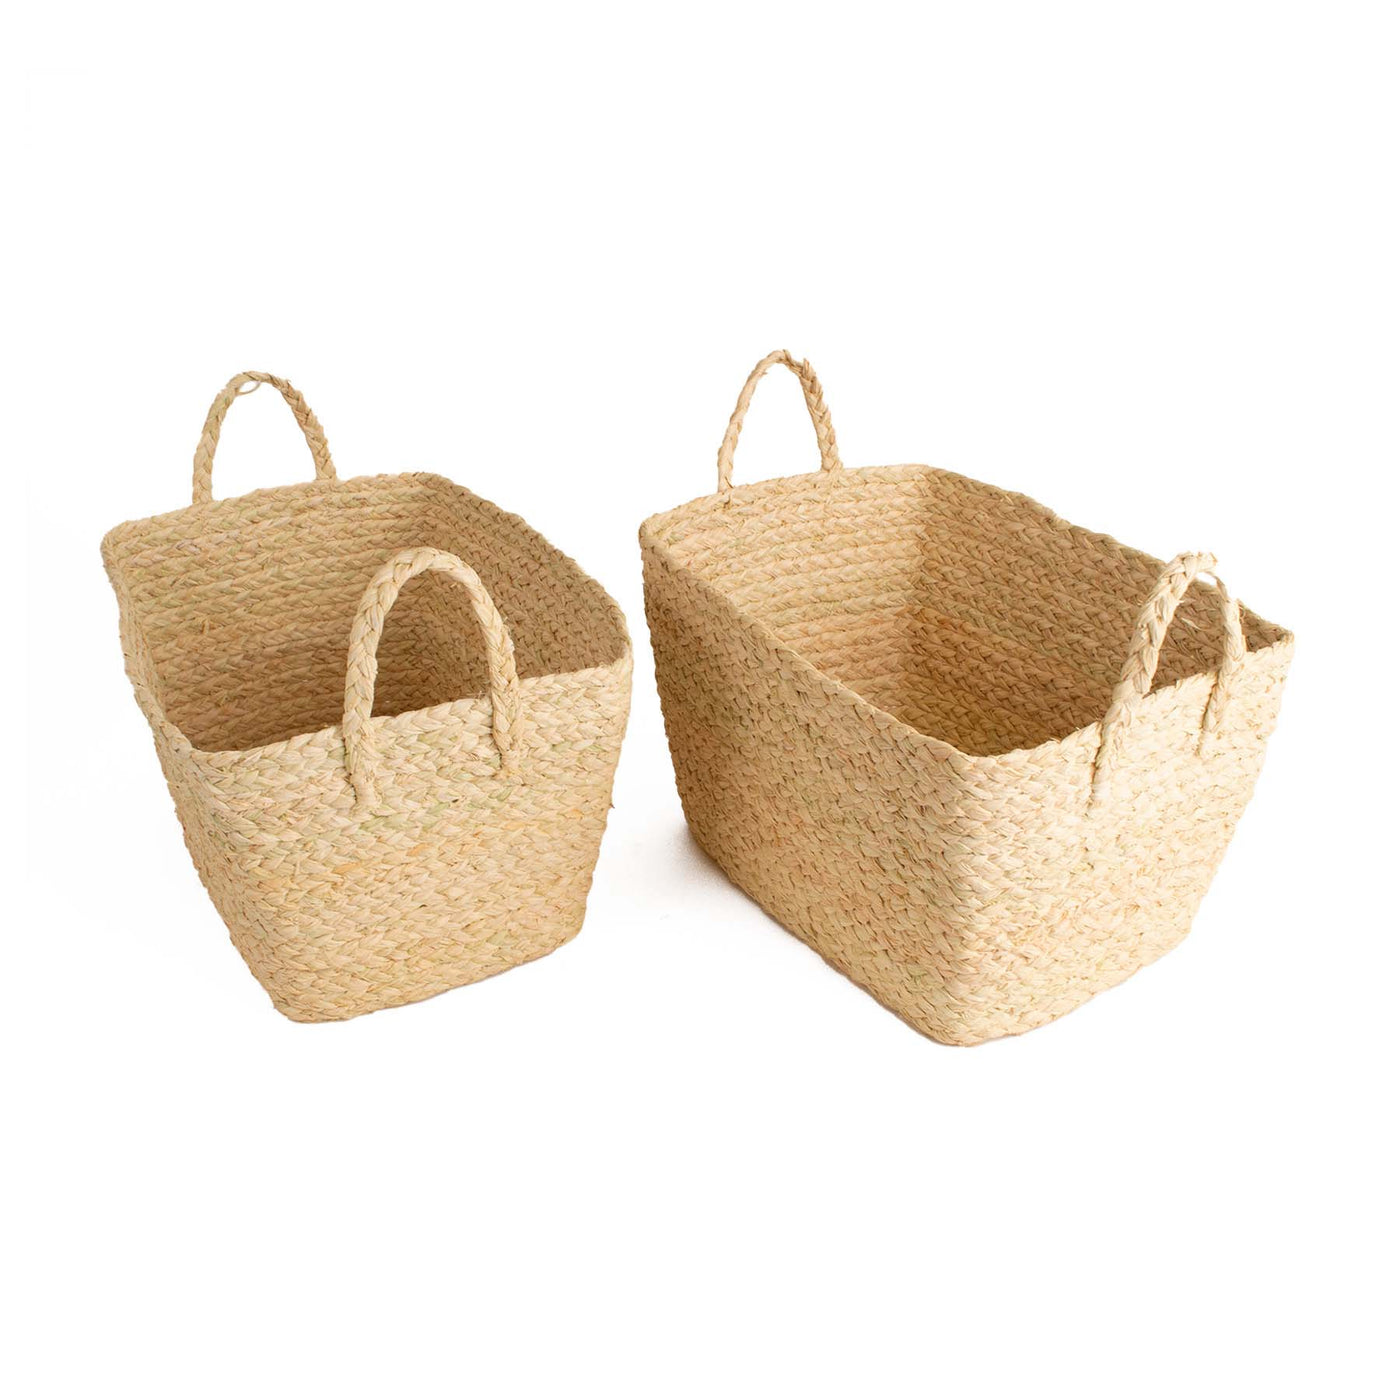 Storage Basket with Handles, Set of 2 - Natural